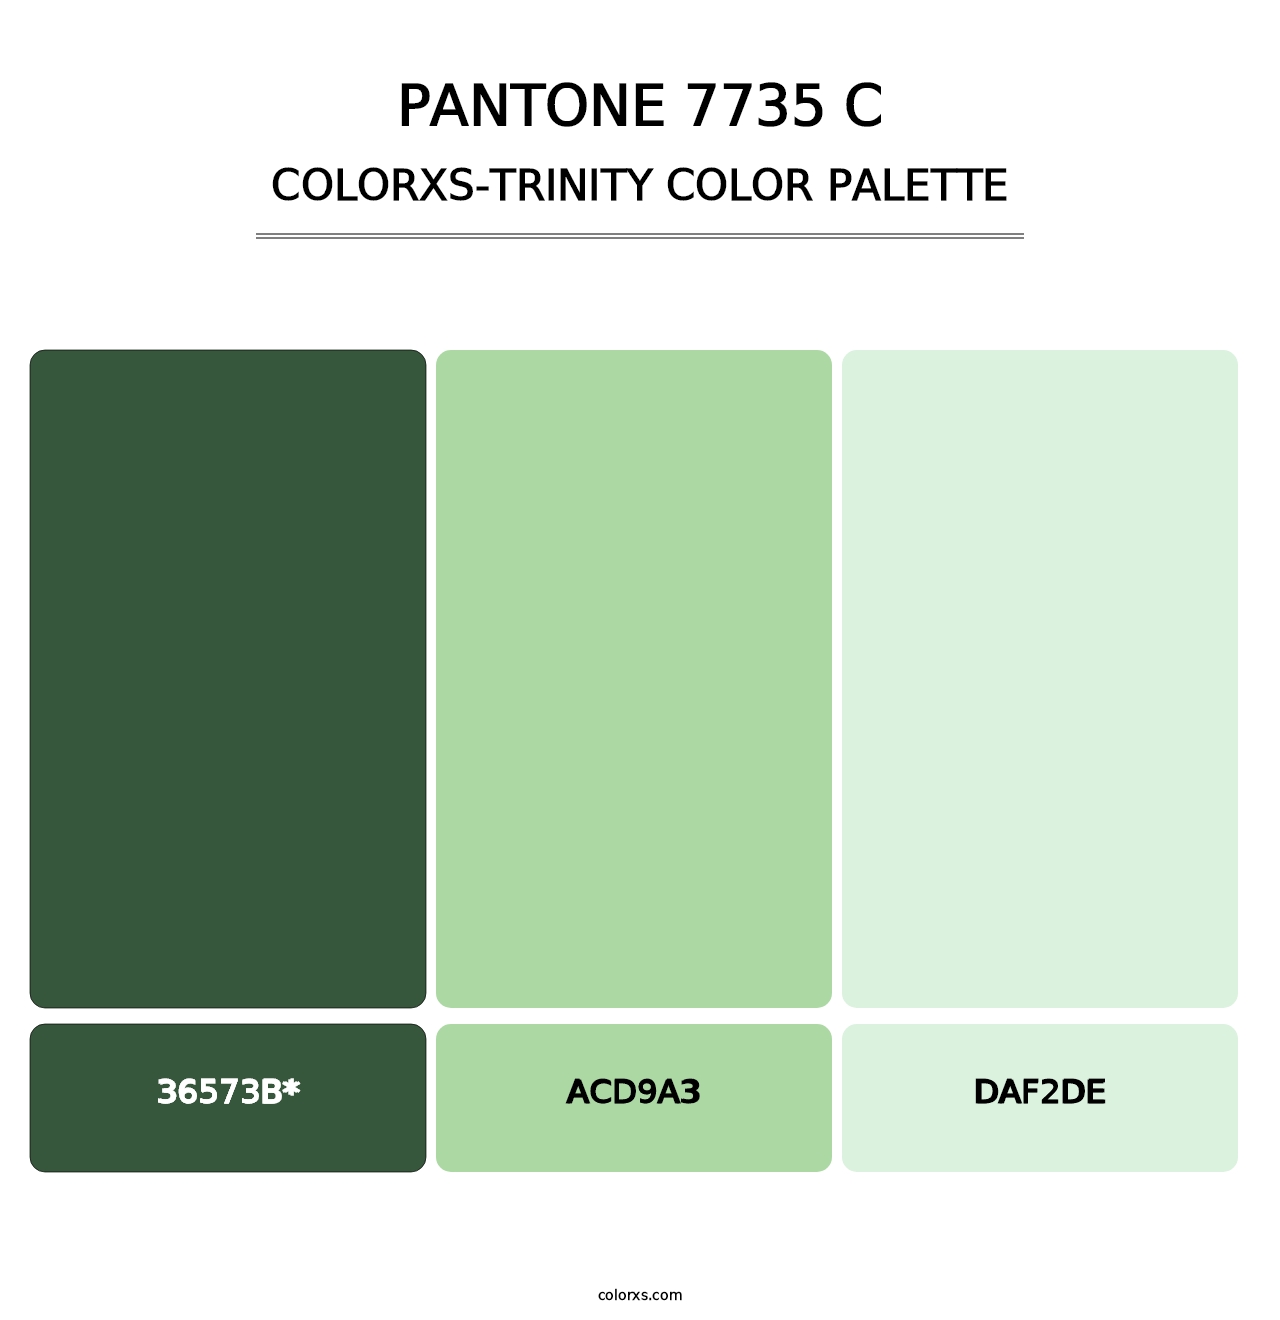 PANTONE 7735 C - Colorxs Trinity Palette